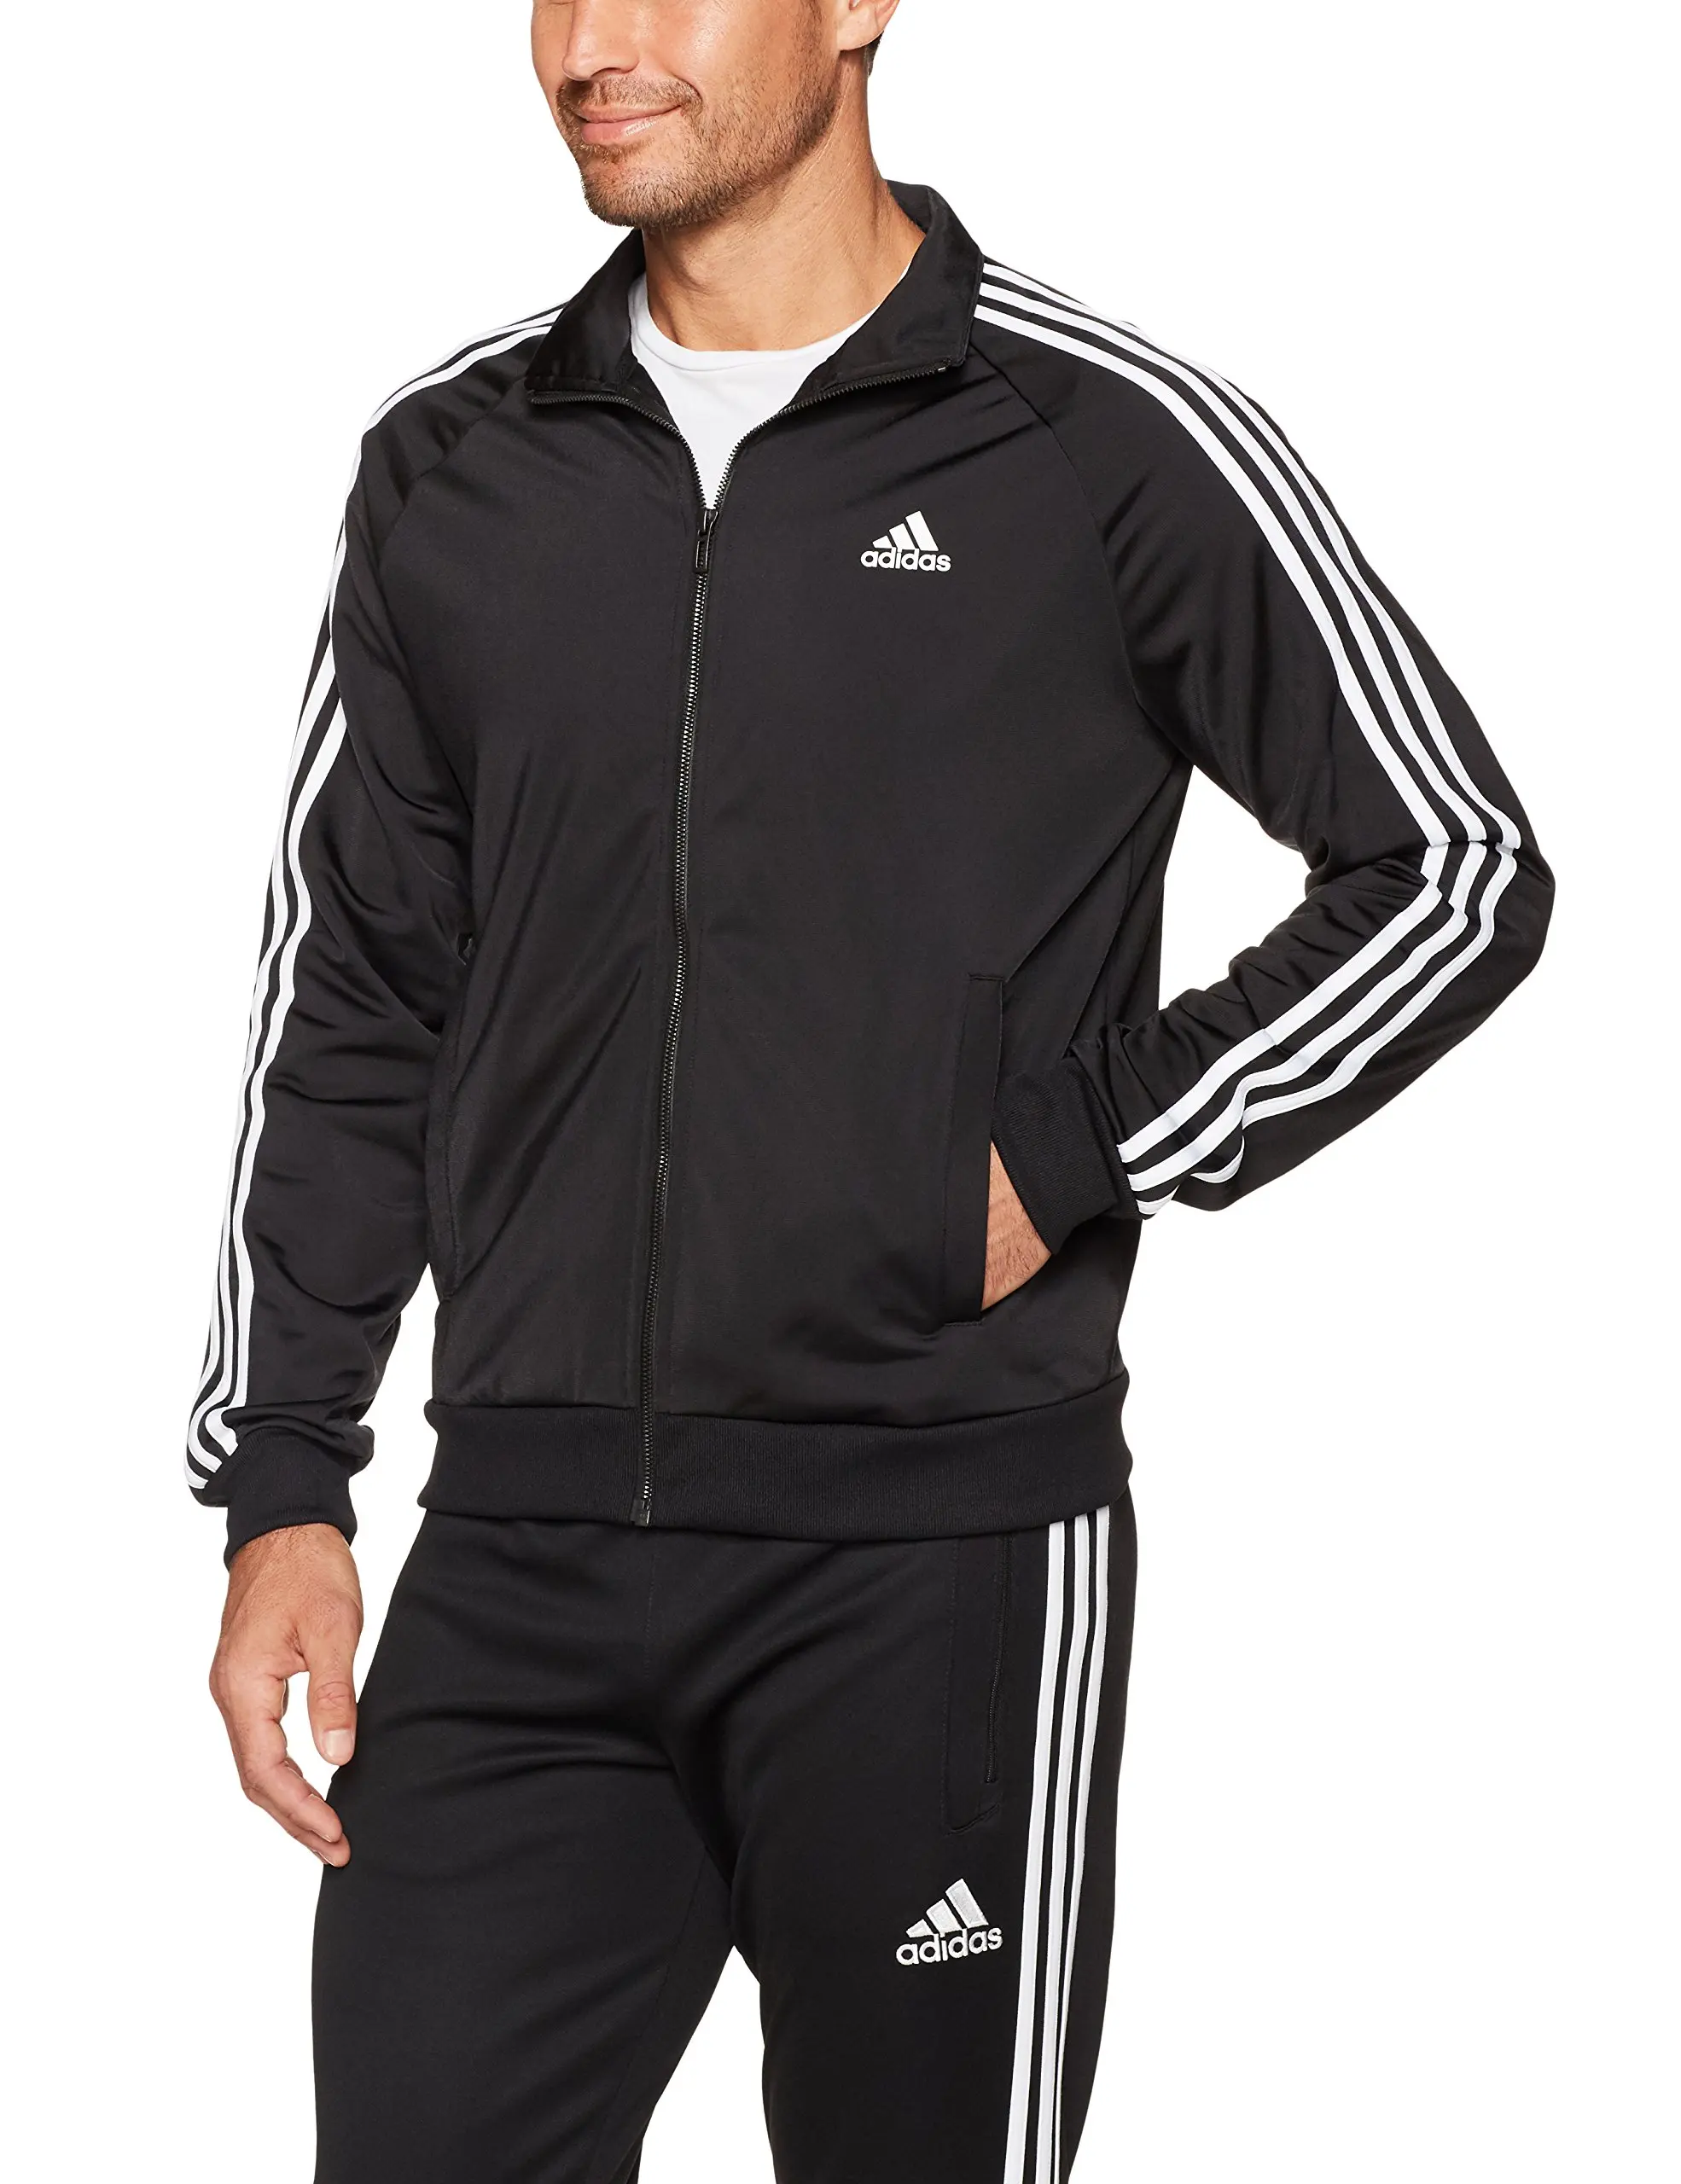 adidas 3 stripe track jacket